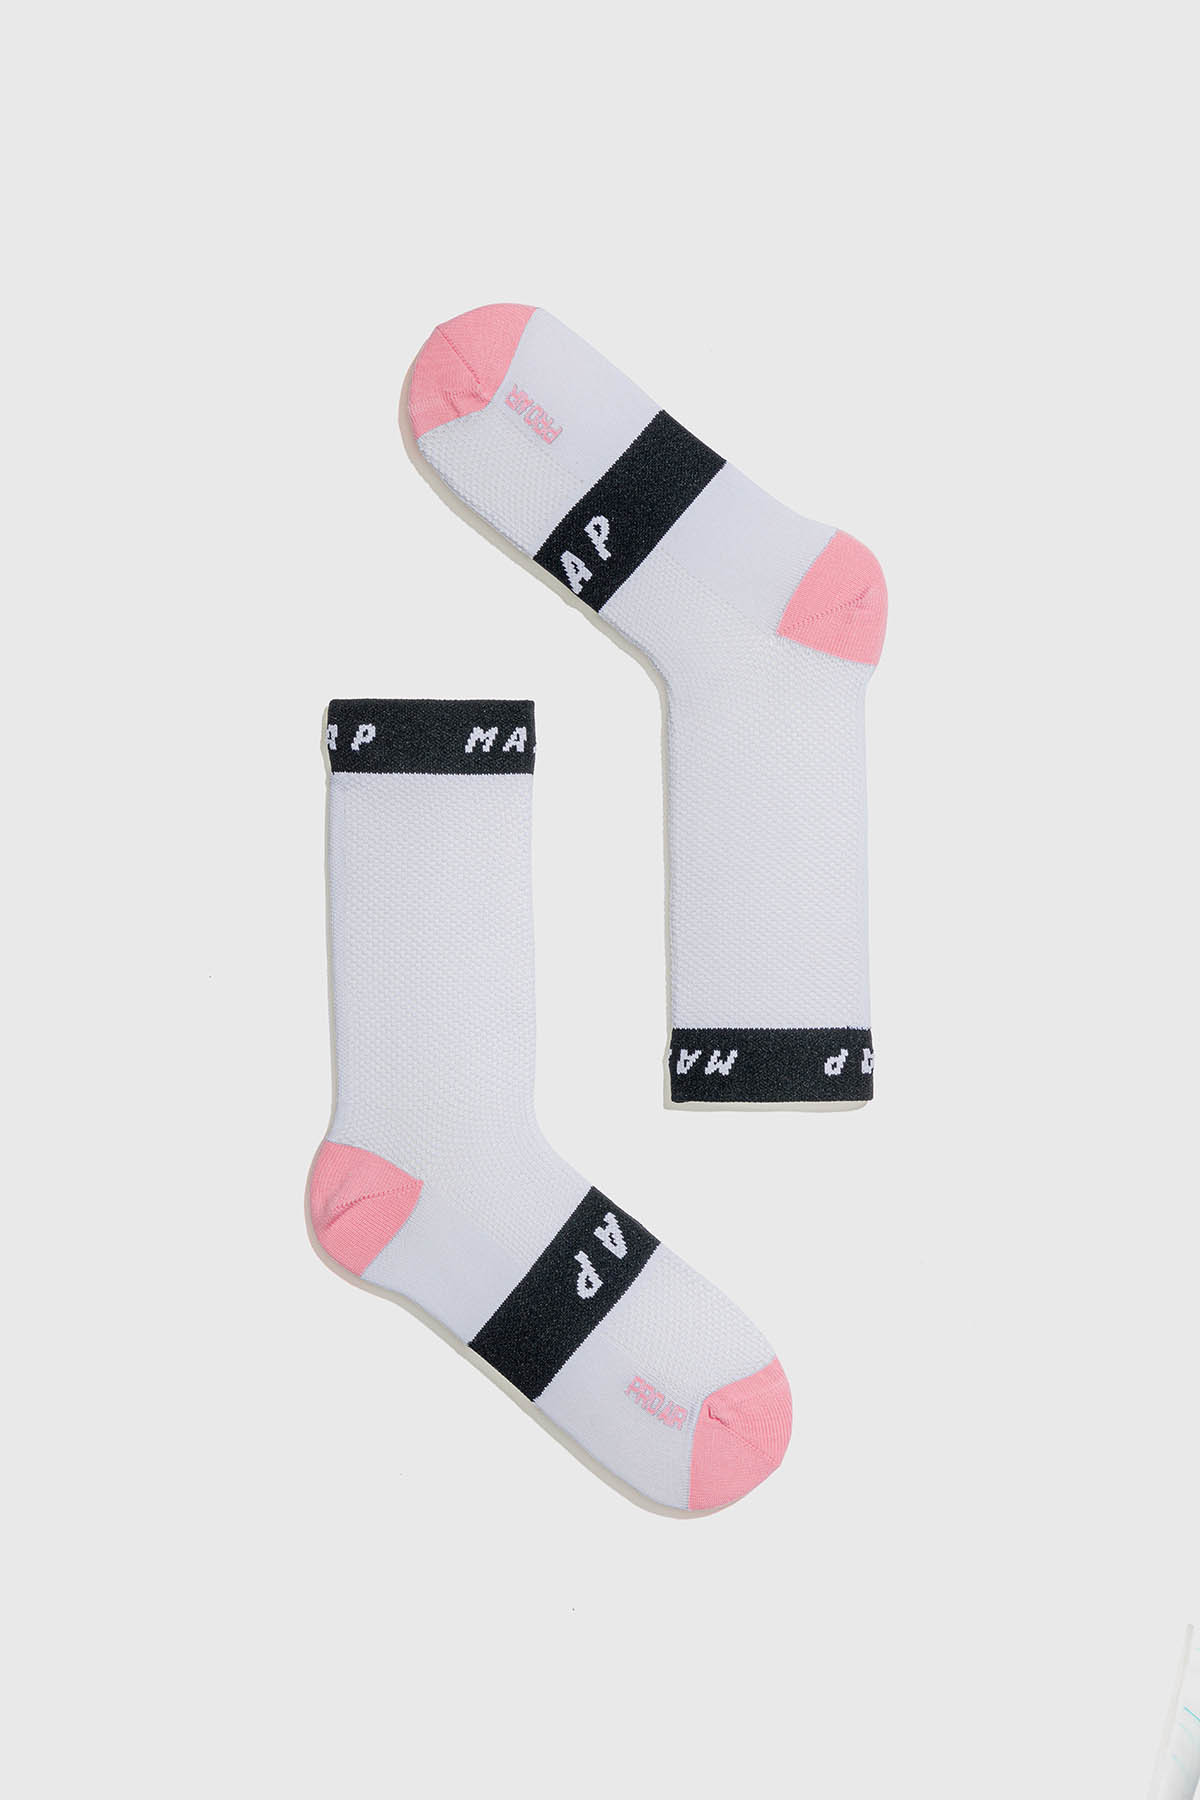 Maap Pro Air Sock - White/Black